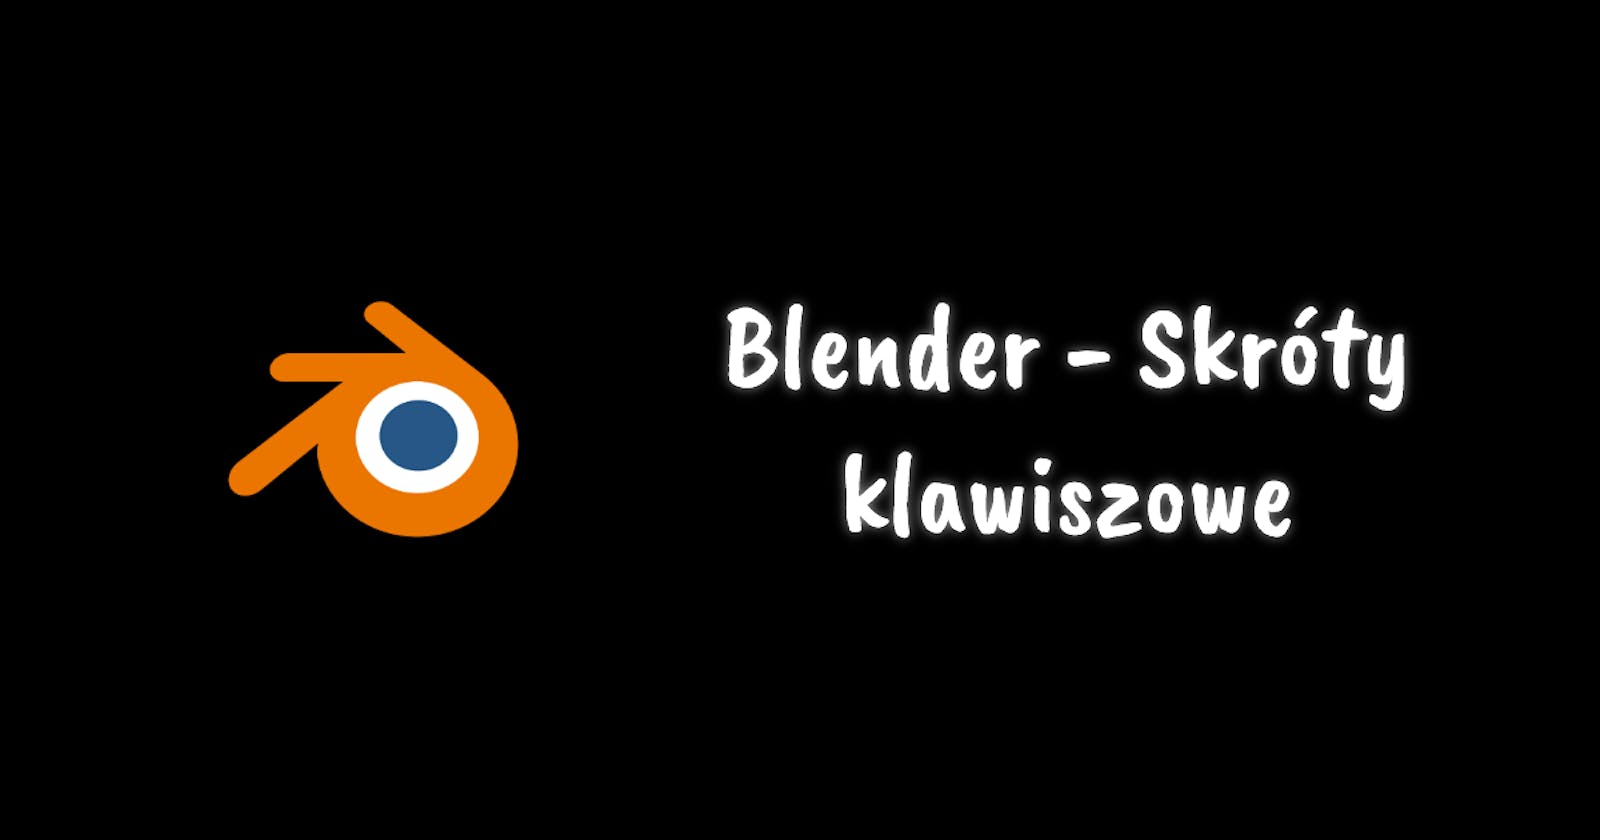 Blender - Skróty klawiszowe [Cheatsheet]